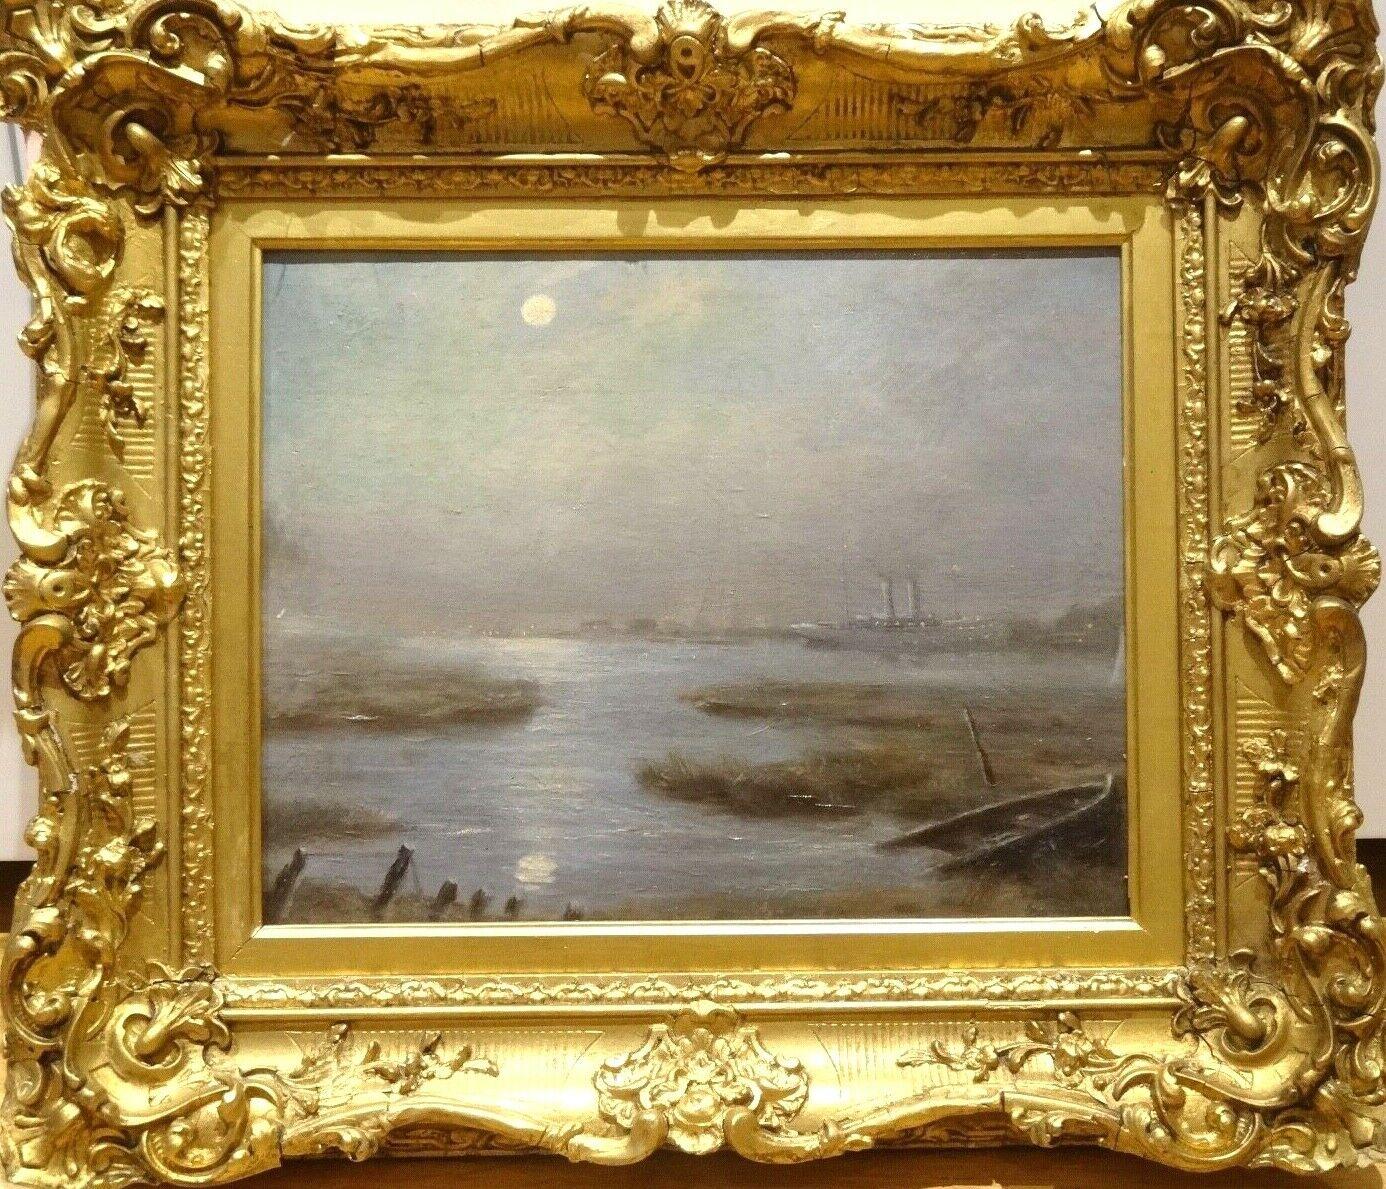 James Abbott McNeill Whistler (circle) Landscape Painting - Thames River Moonlit Nocturne, 19th Century - James Abbot McNeill Whistler